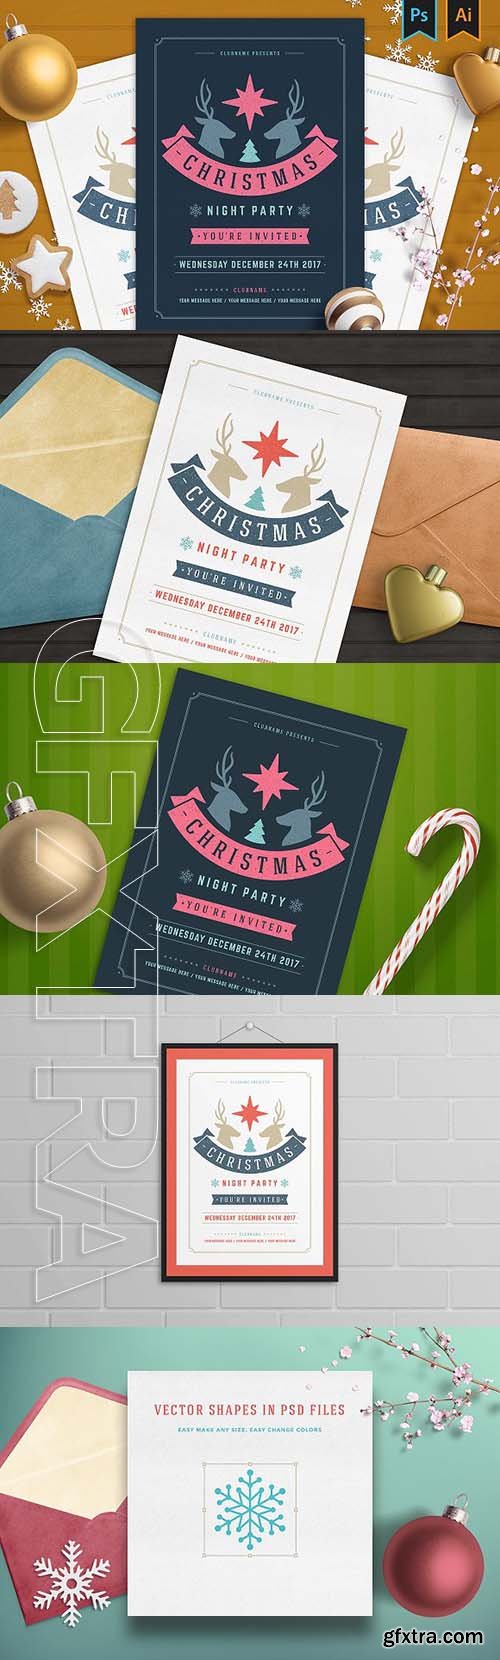 CreativeMarket - Christmas party invitation flyer 1903661